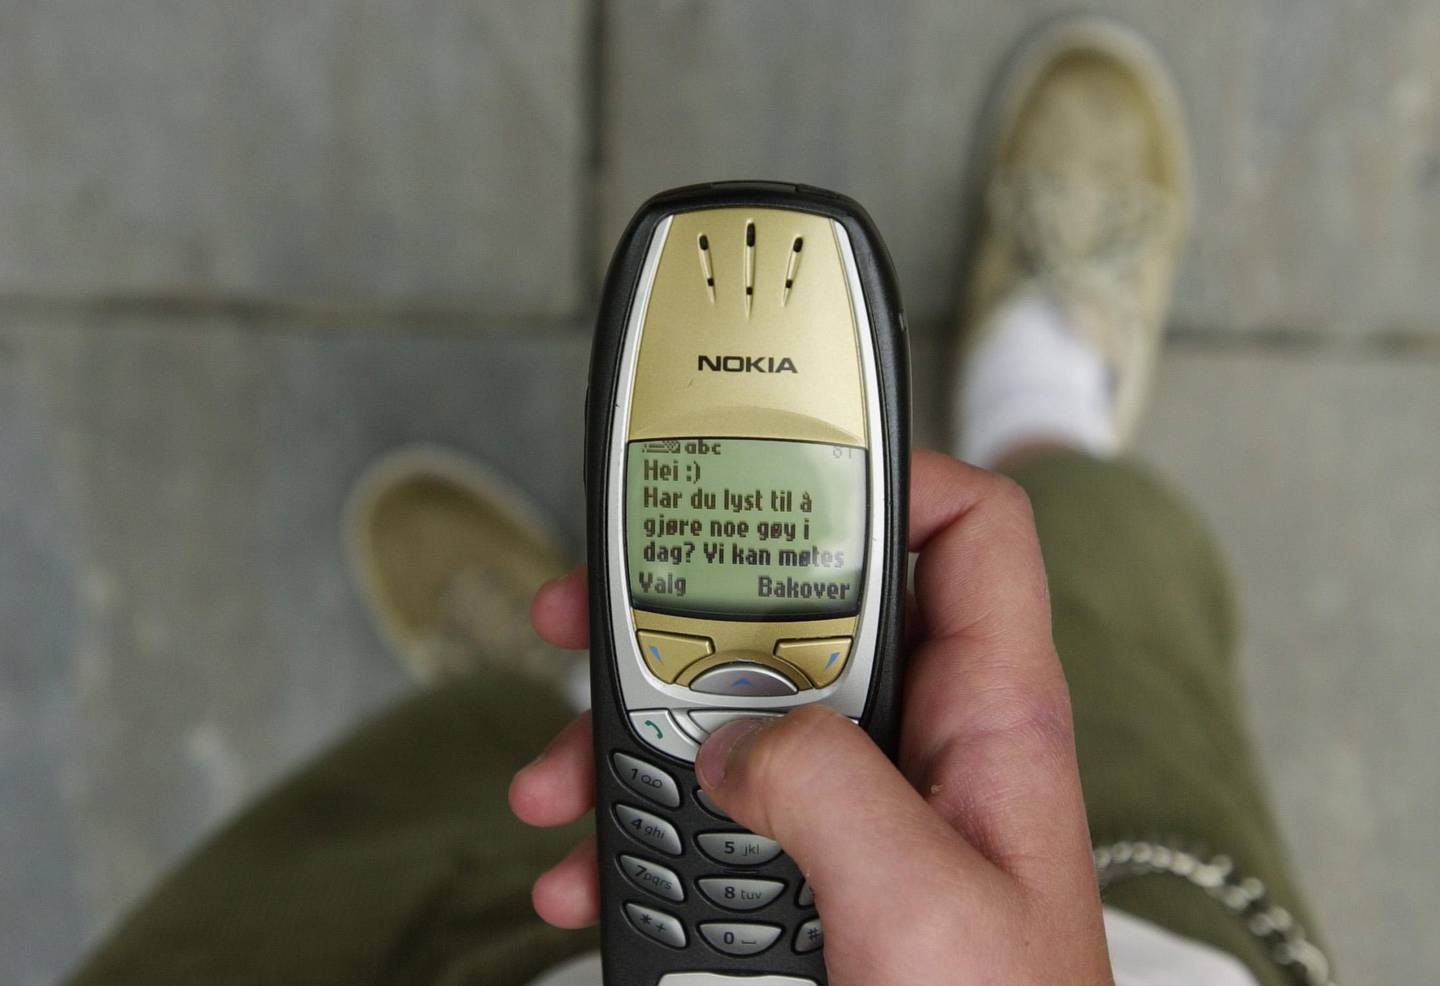 OSLO 20020719:
Gutt med Nokia mobiltelefon skriver tekstmelding / SMS .
Foto: Erlend Aas / SCANPIX